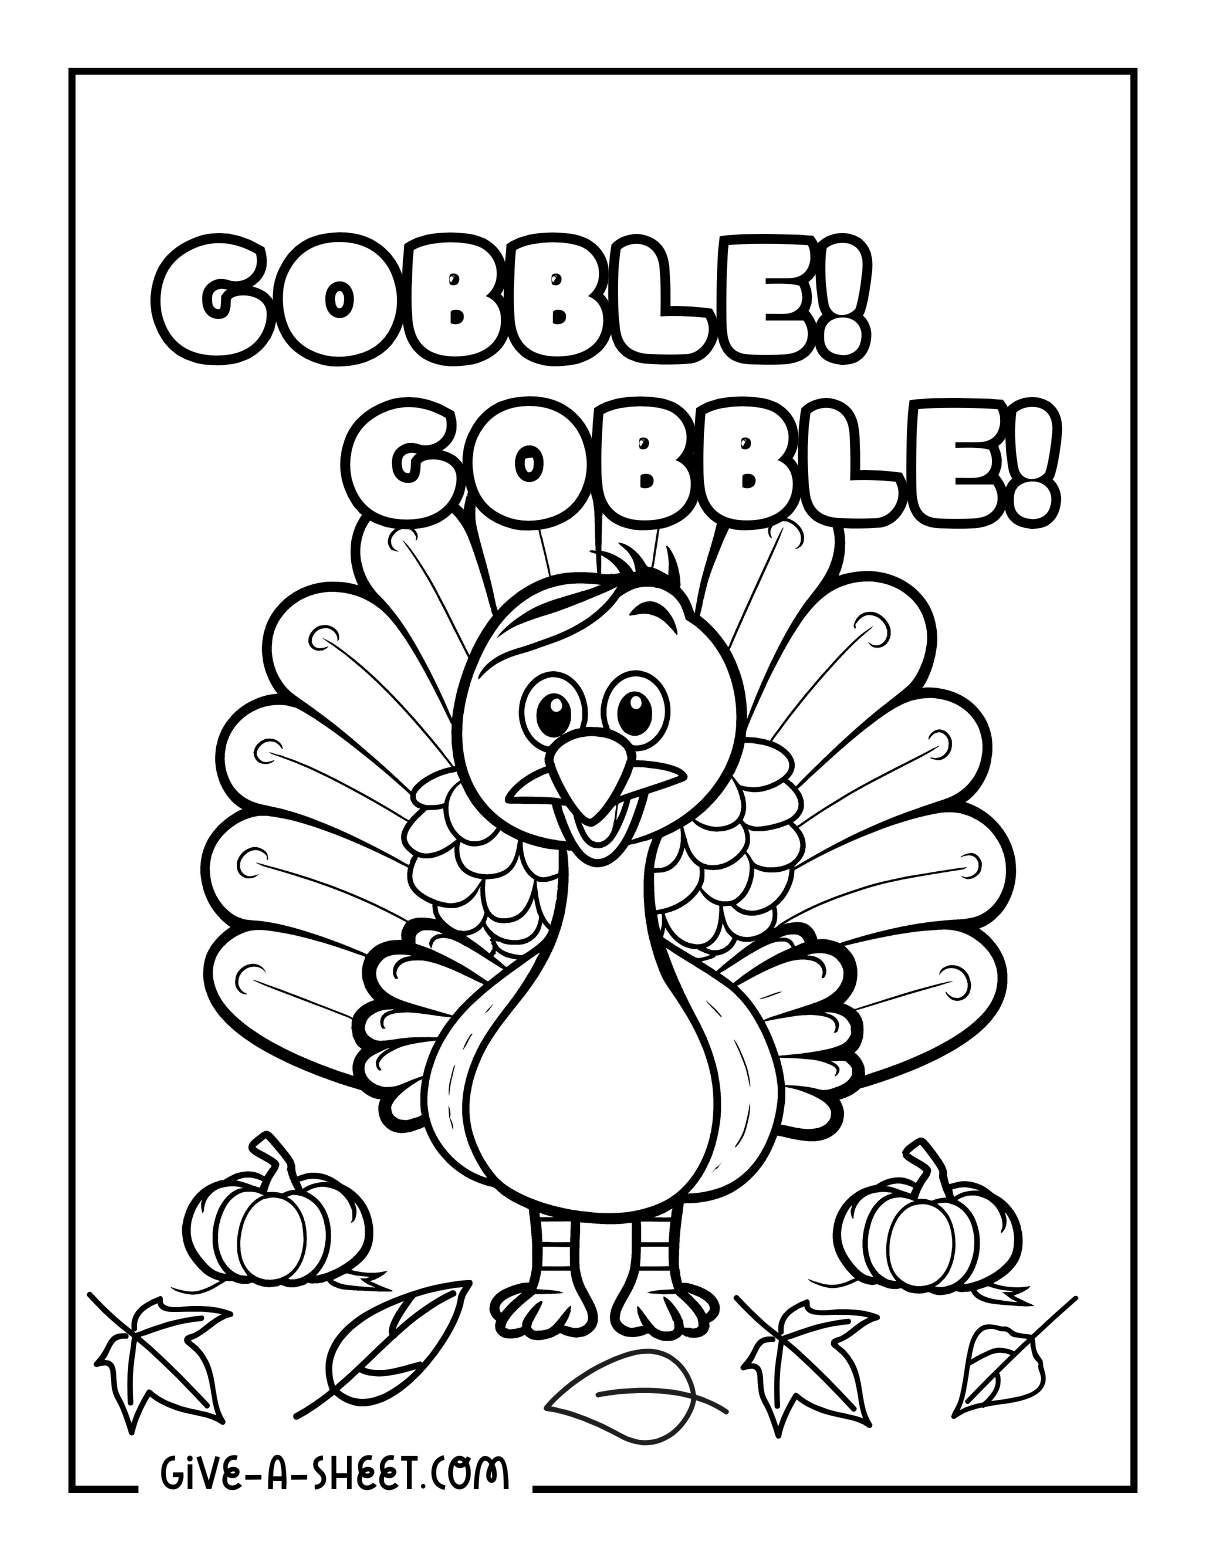 Kawaii gobbler turkey coloring page kids.